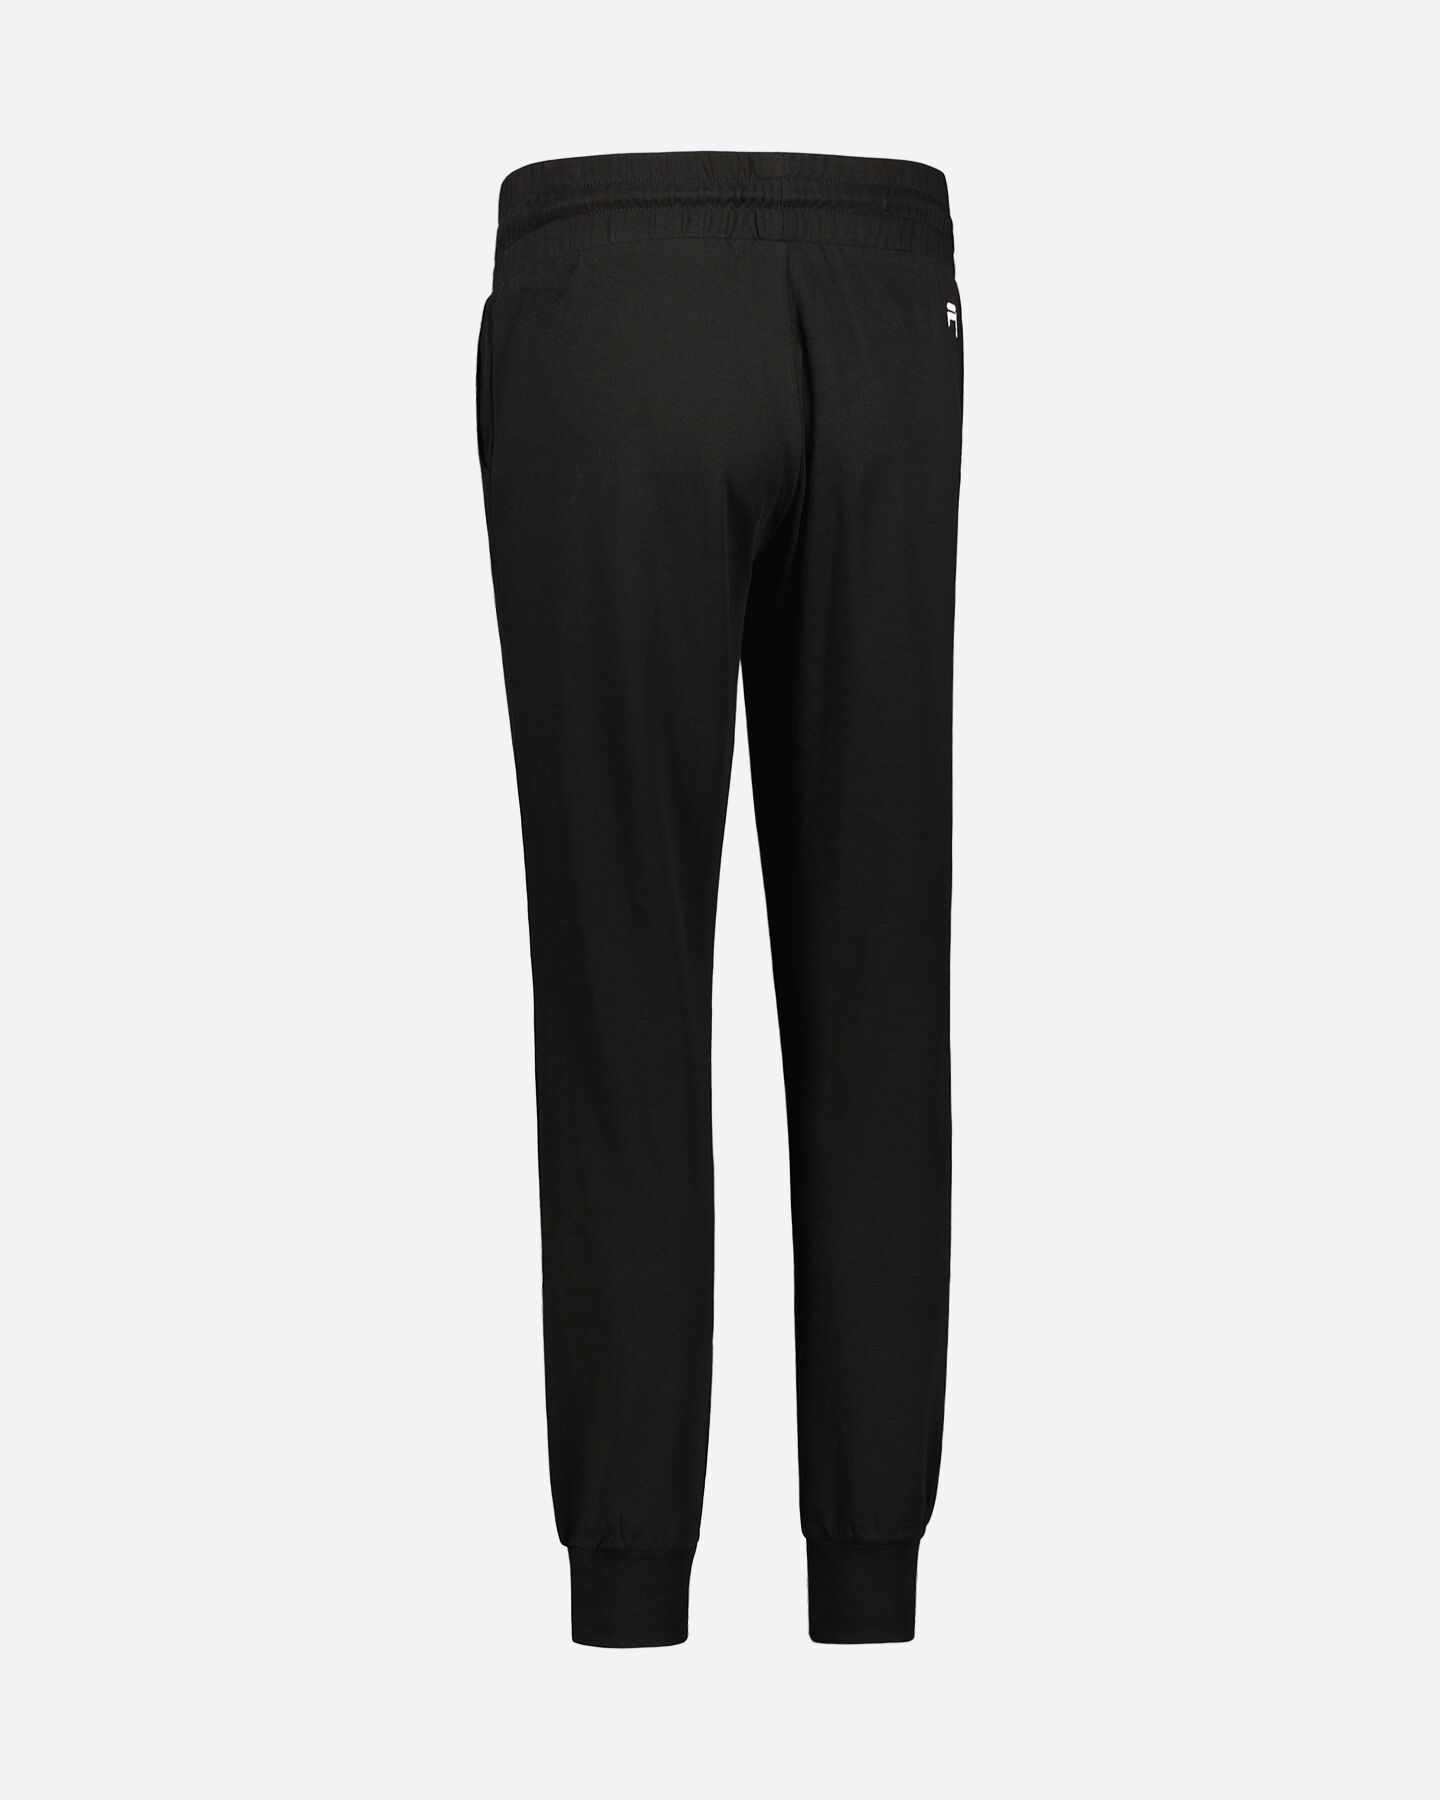  Pantalone FILA GRAPHICS LOGO LINEA W S4100476|050|XS scatto 5